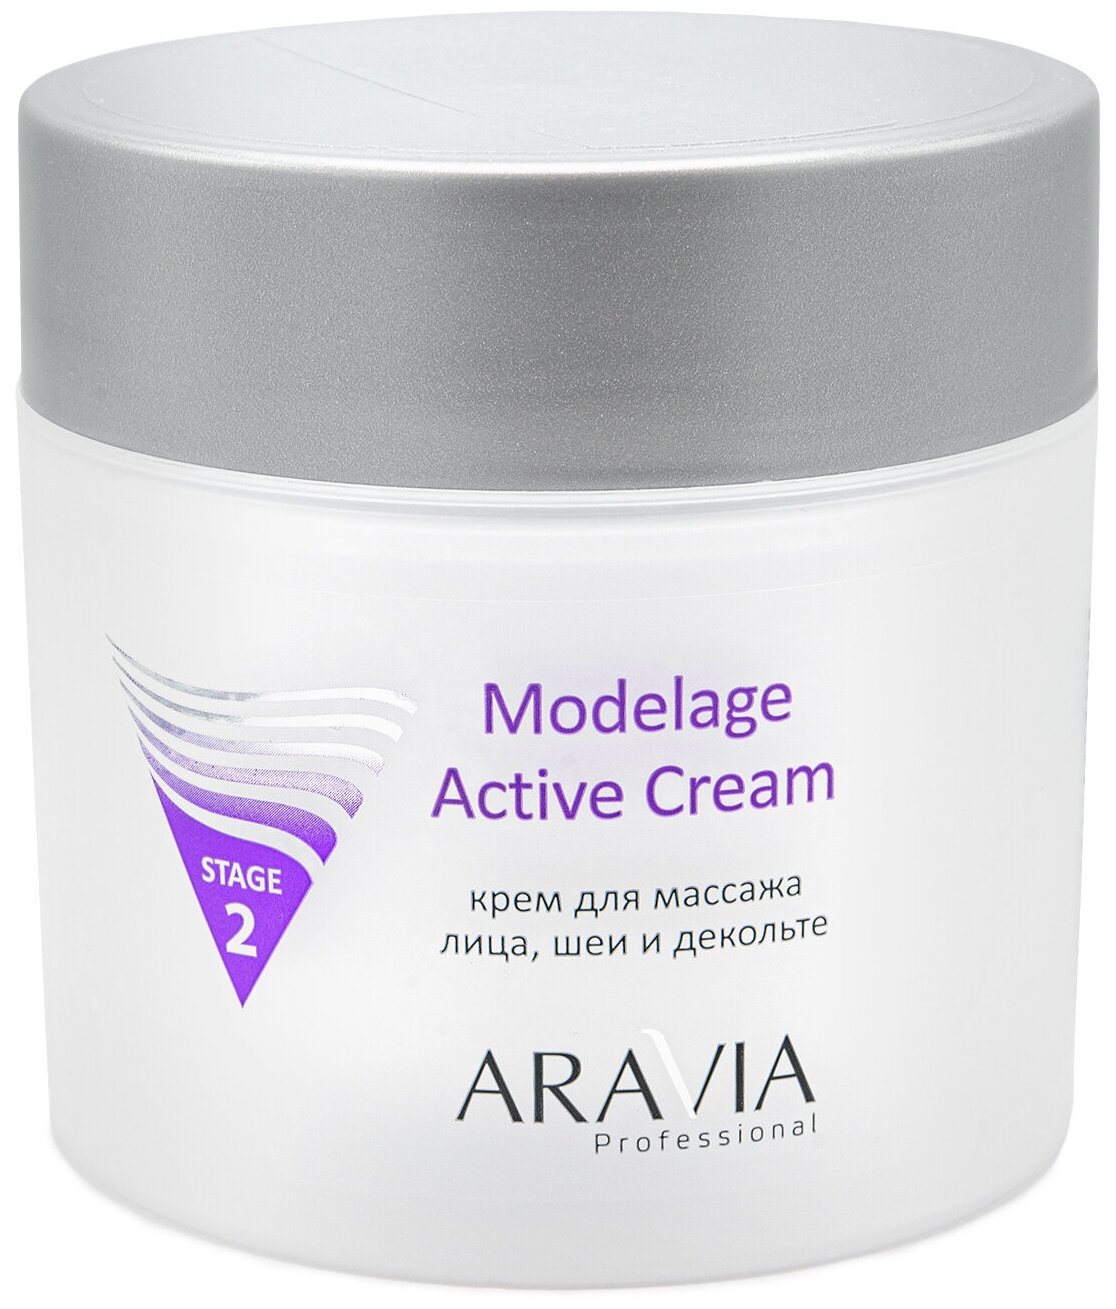 ARAVIA Professional Modelage Active Cream Крем для массажа лица шеи и декольте